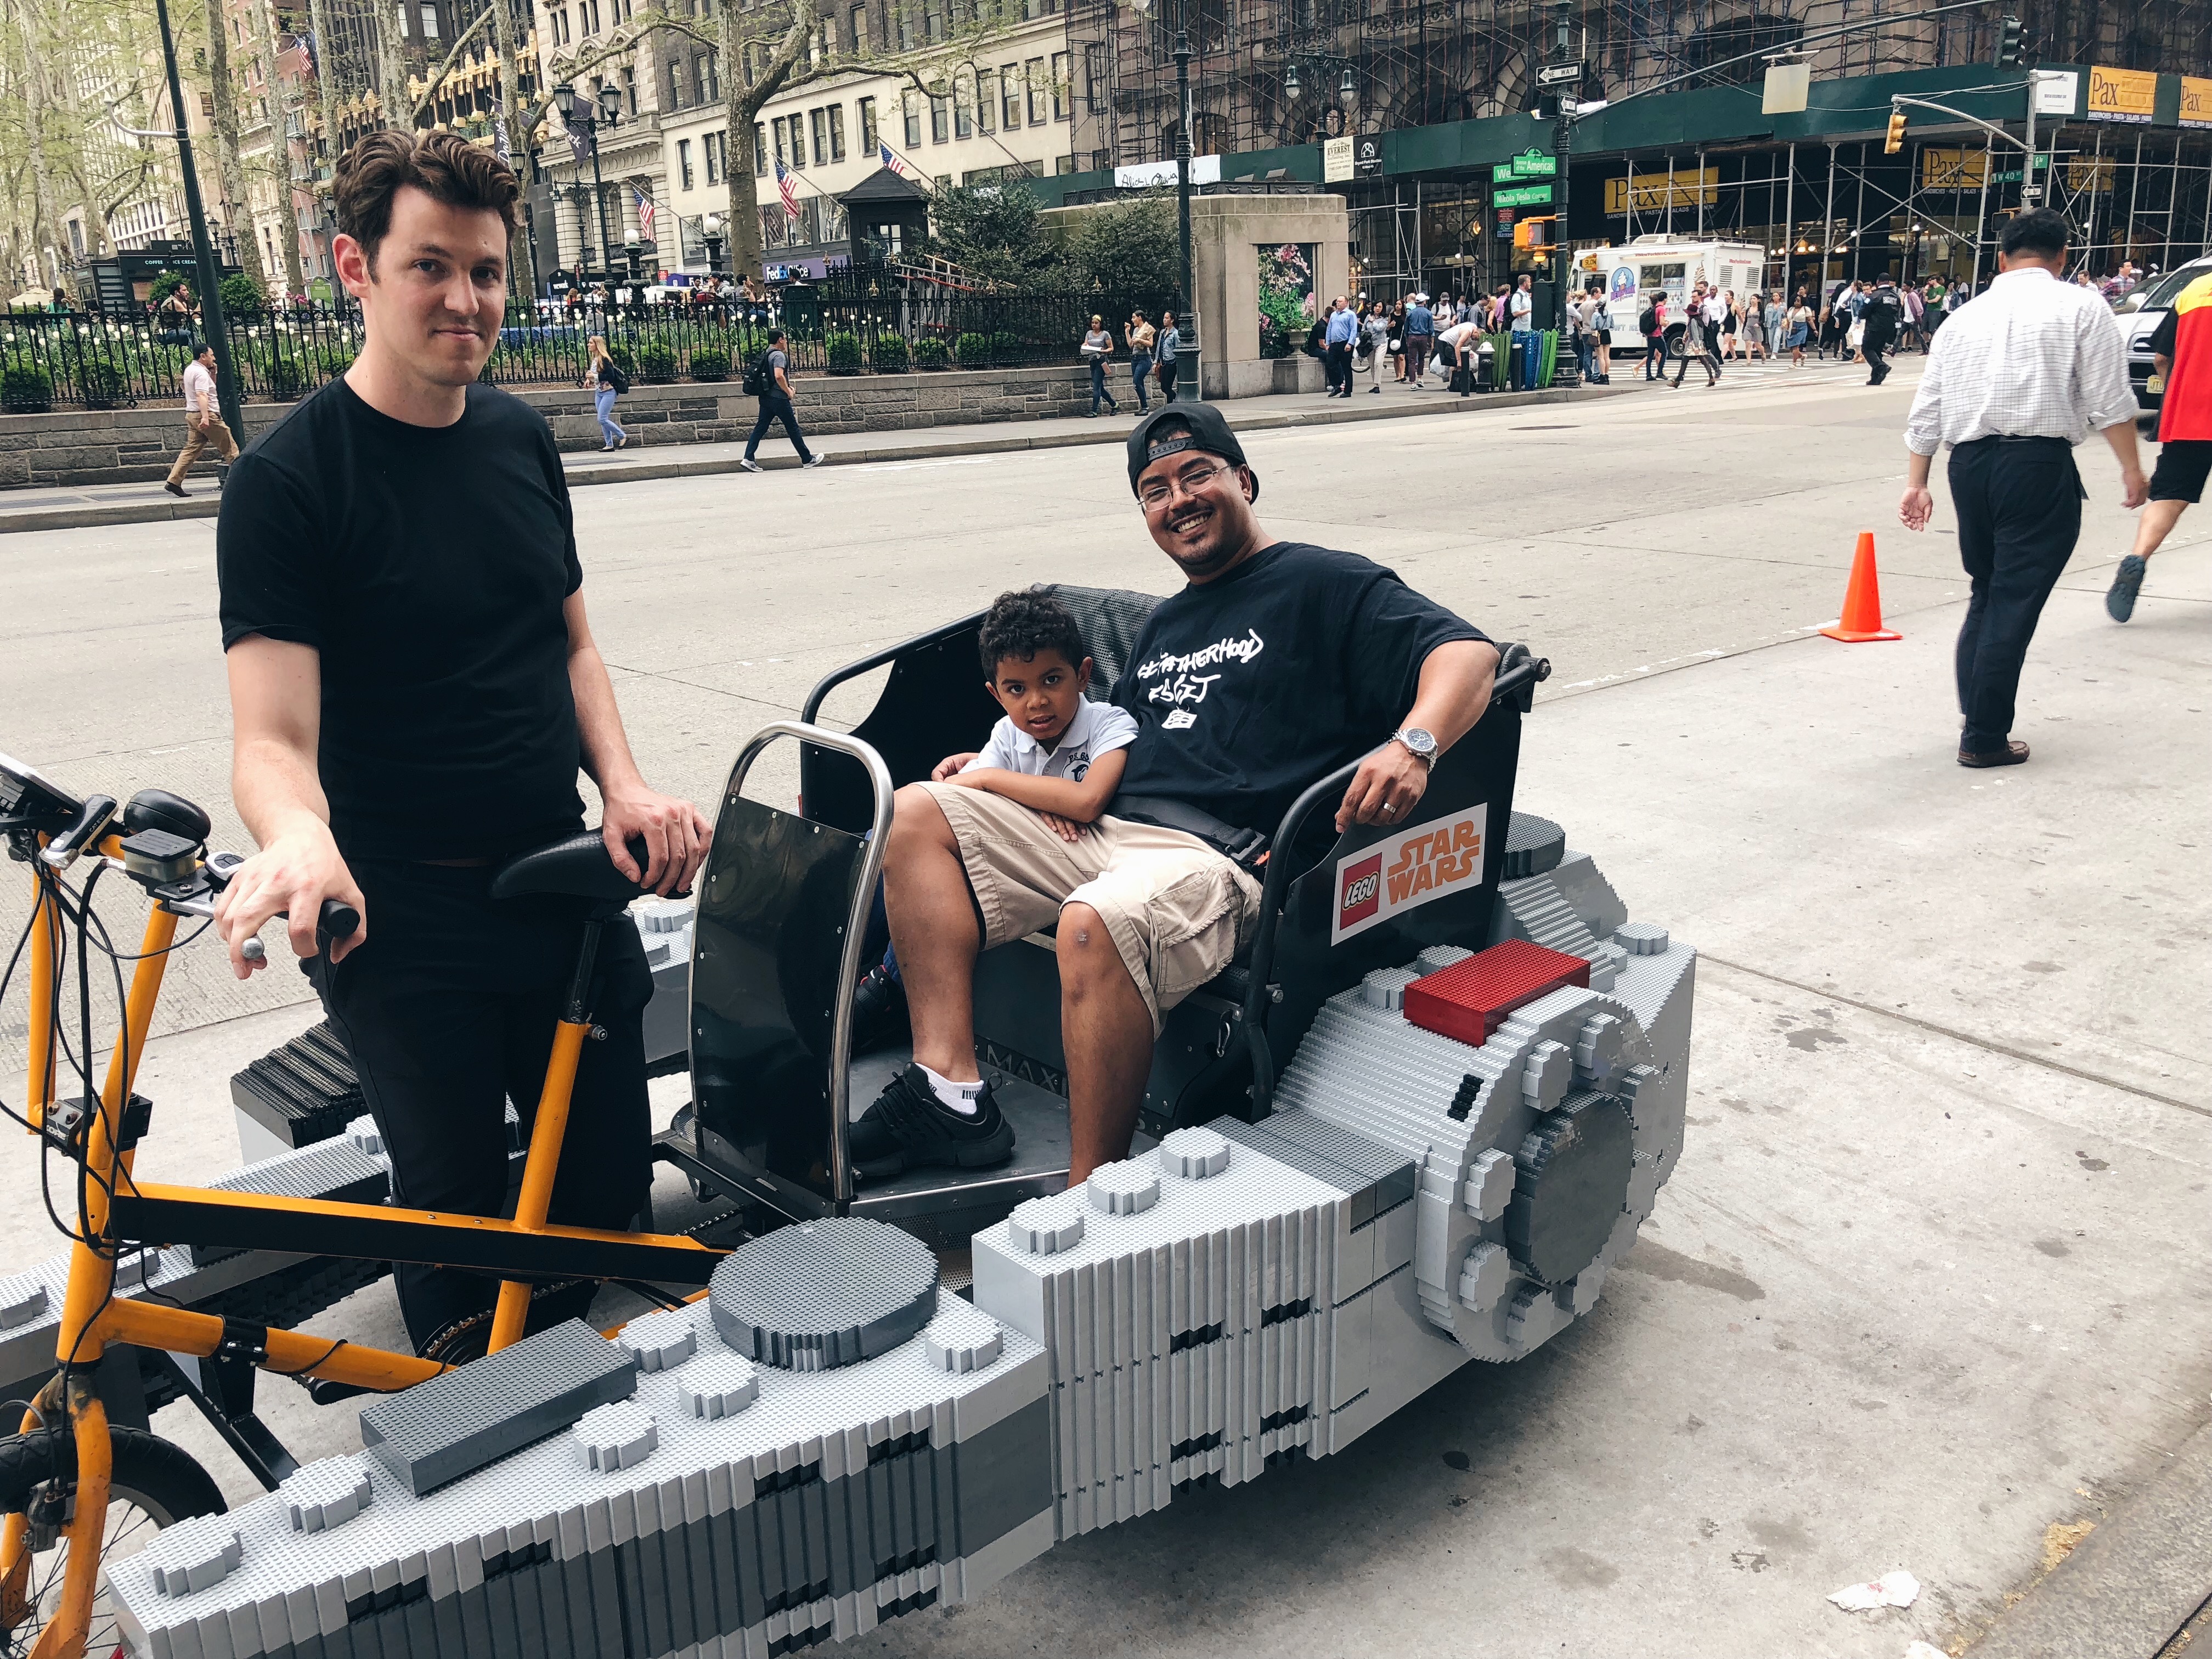 Lego Millennium Falcon Pedicab #FatherhoodIsLit